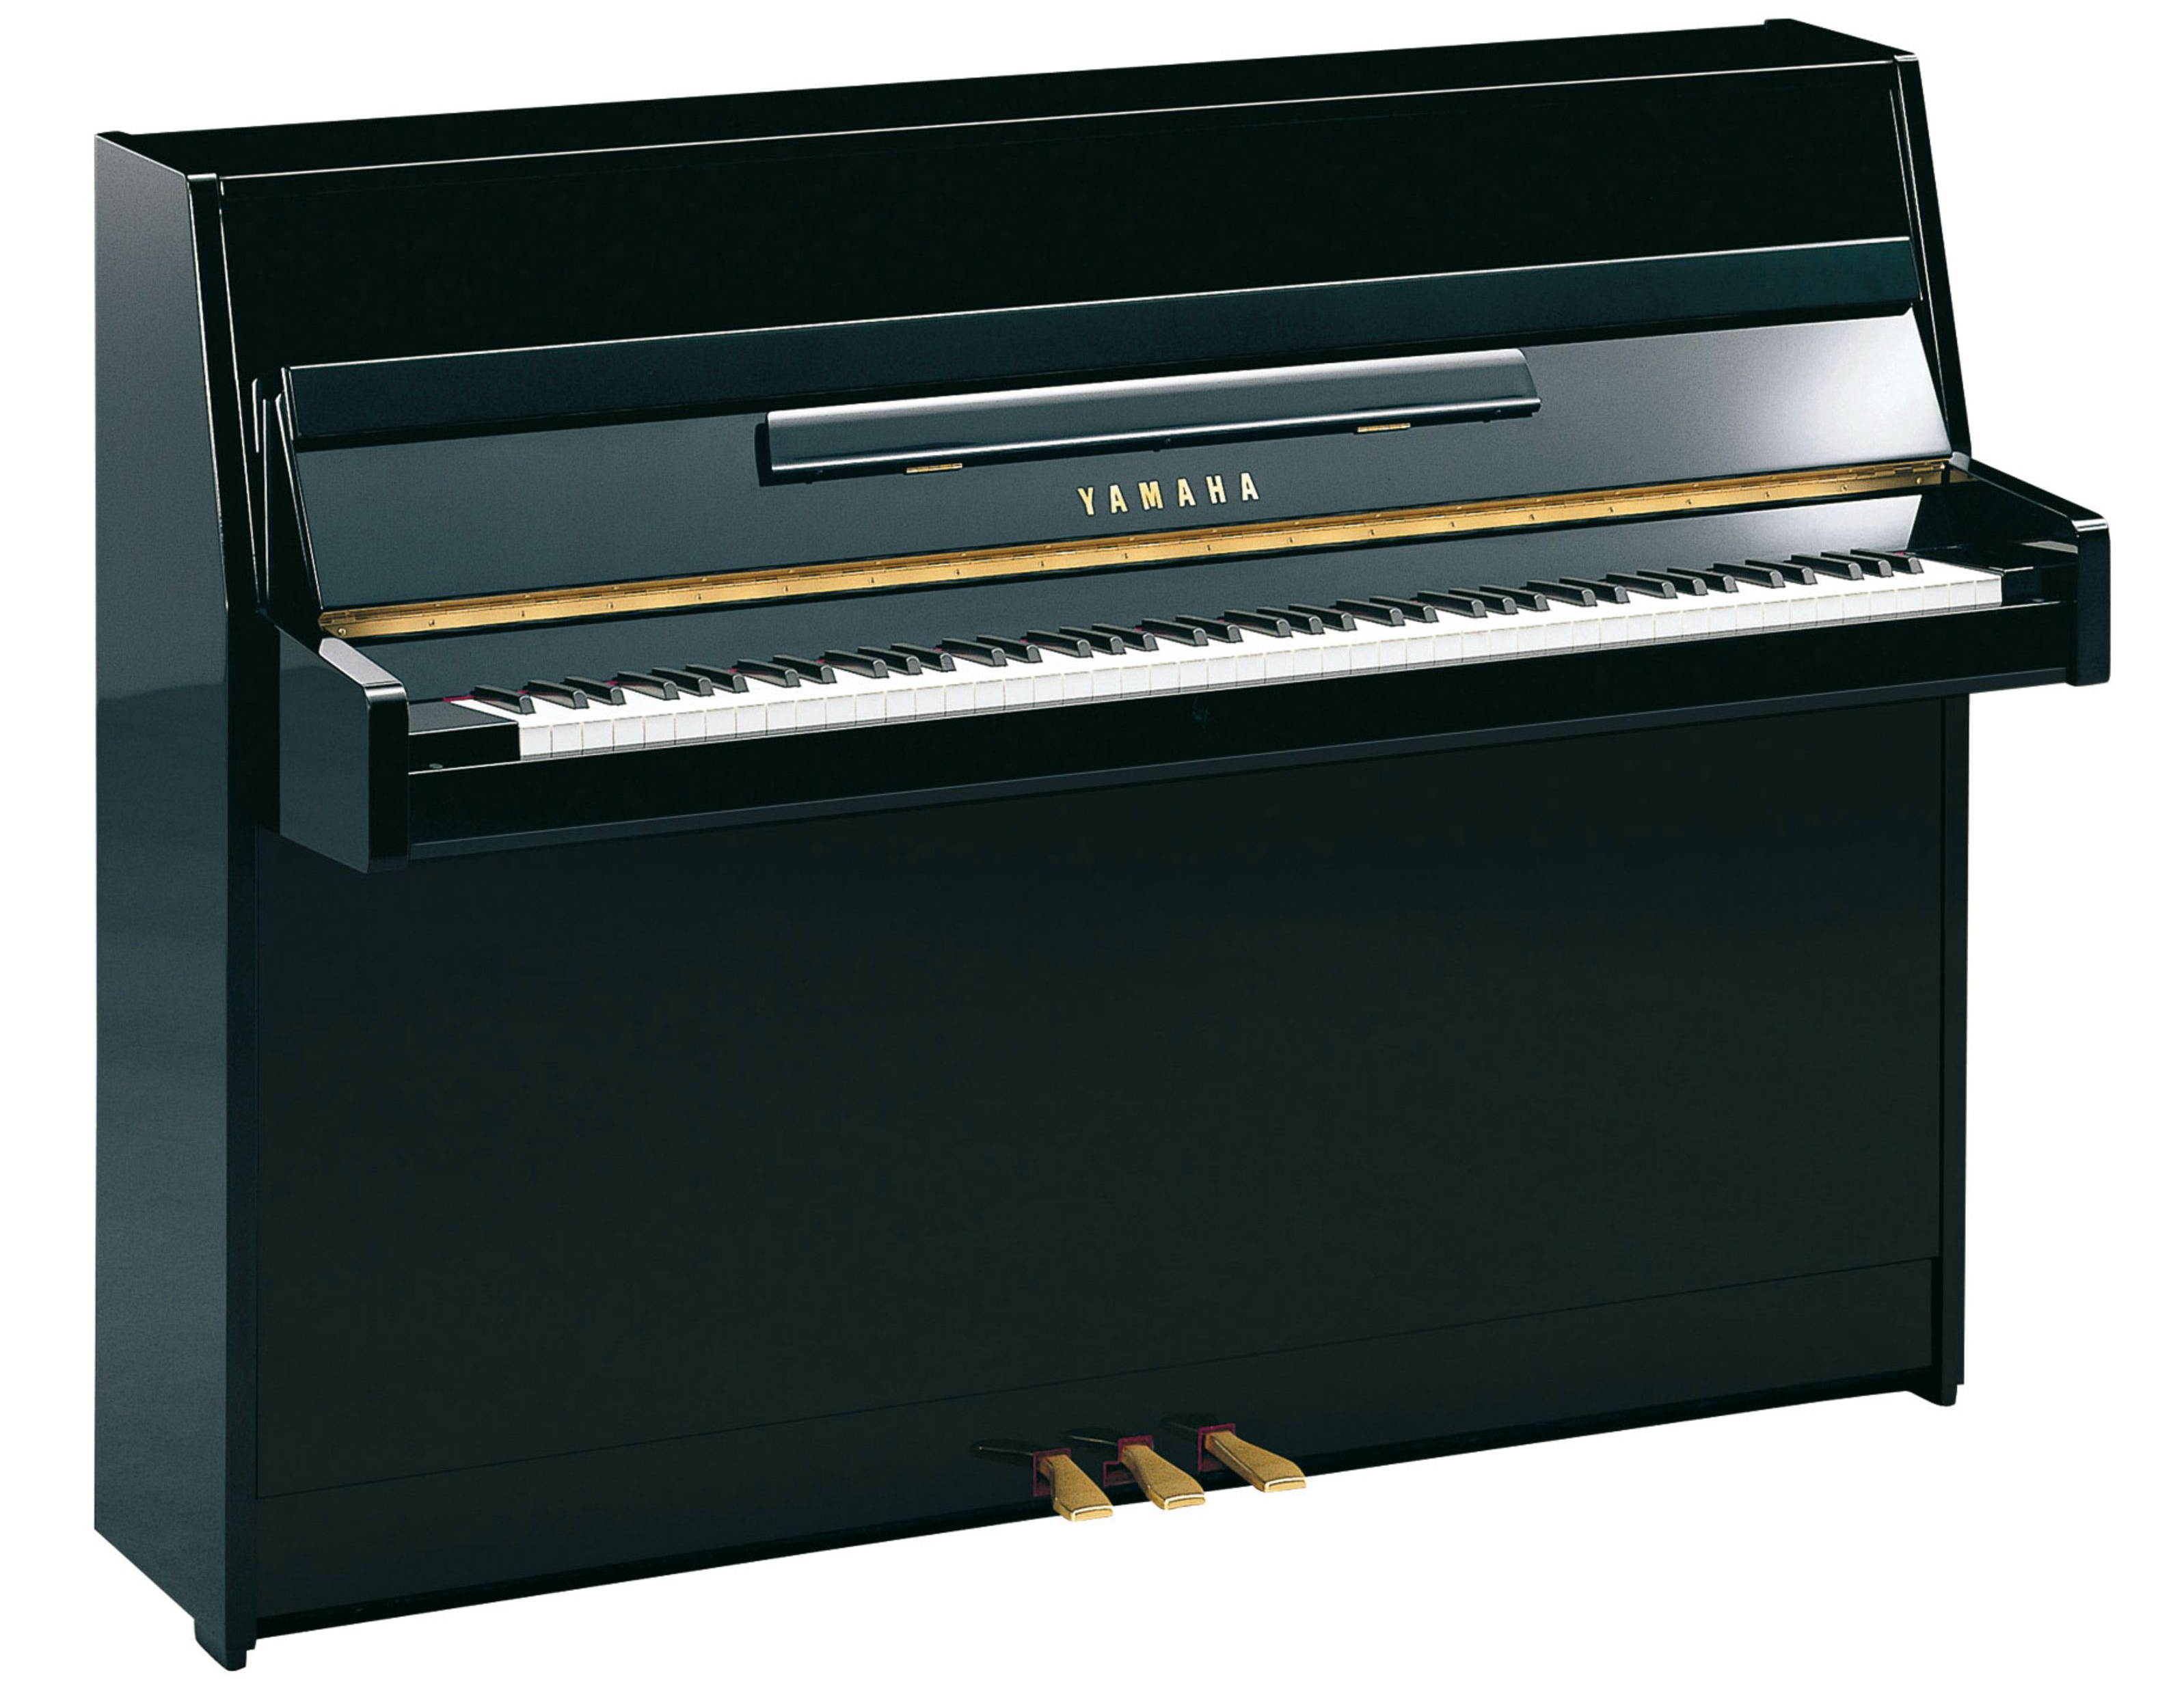 Yamaha B1 PE Piano 109 cm Black polished | MUSIC STORE professional